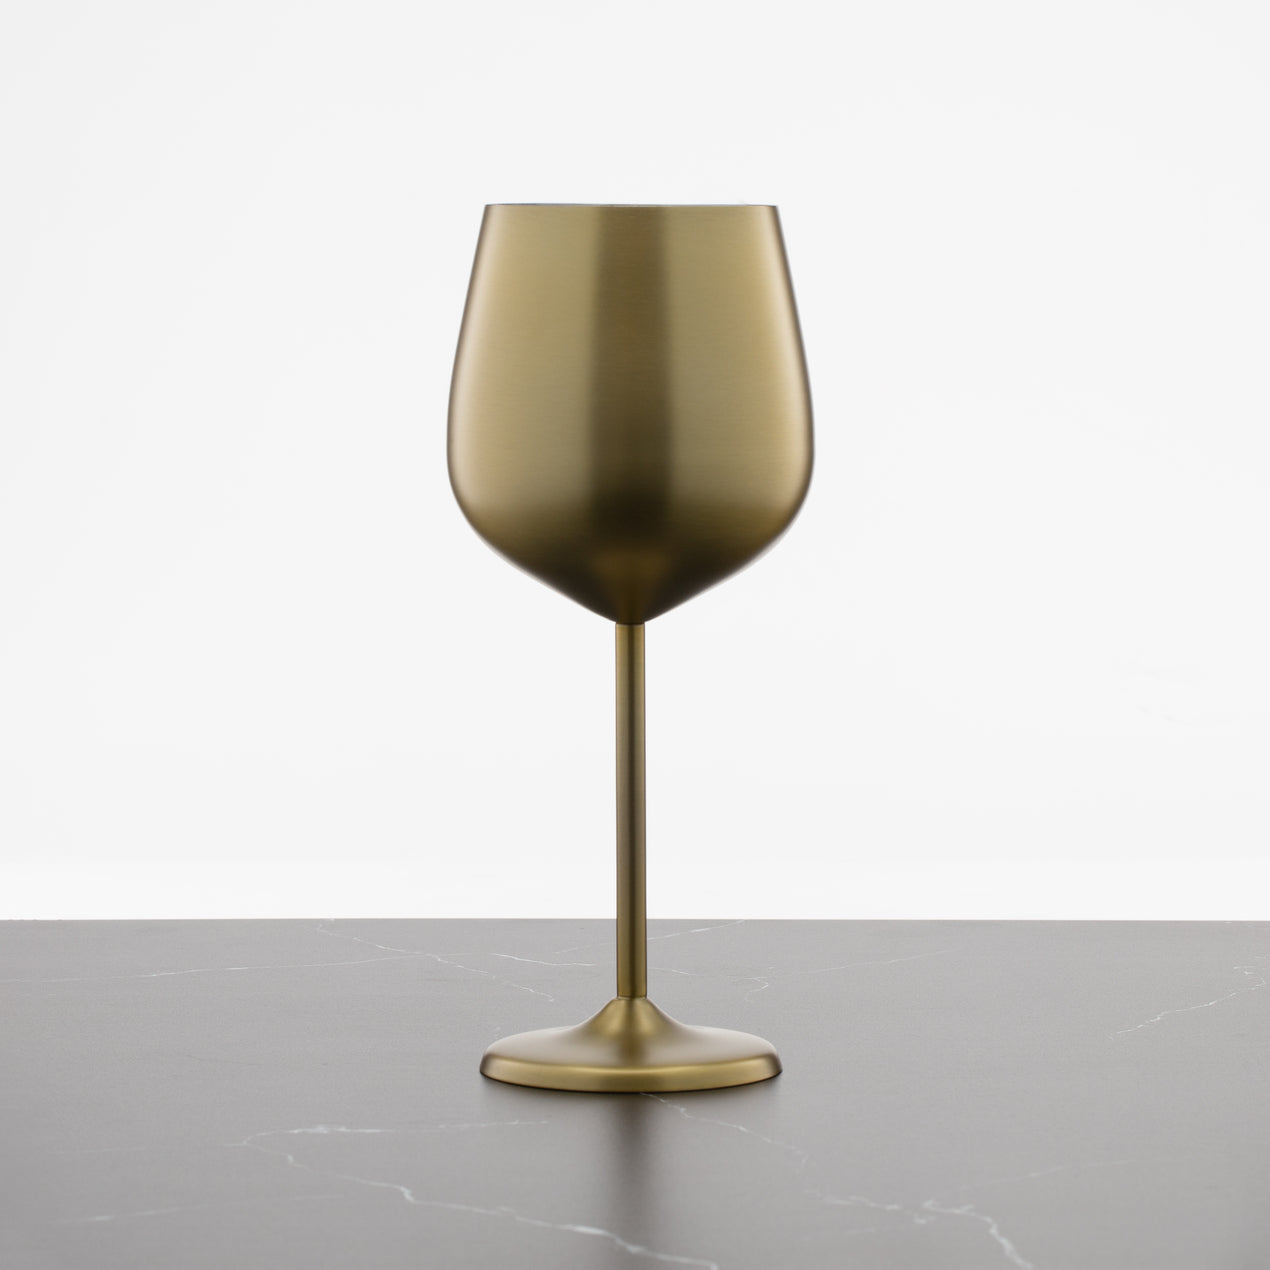 18 Oz Gold Stainless Wine Glasses, Set of 4 – Cambridge Silversmiths®